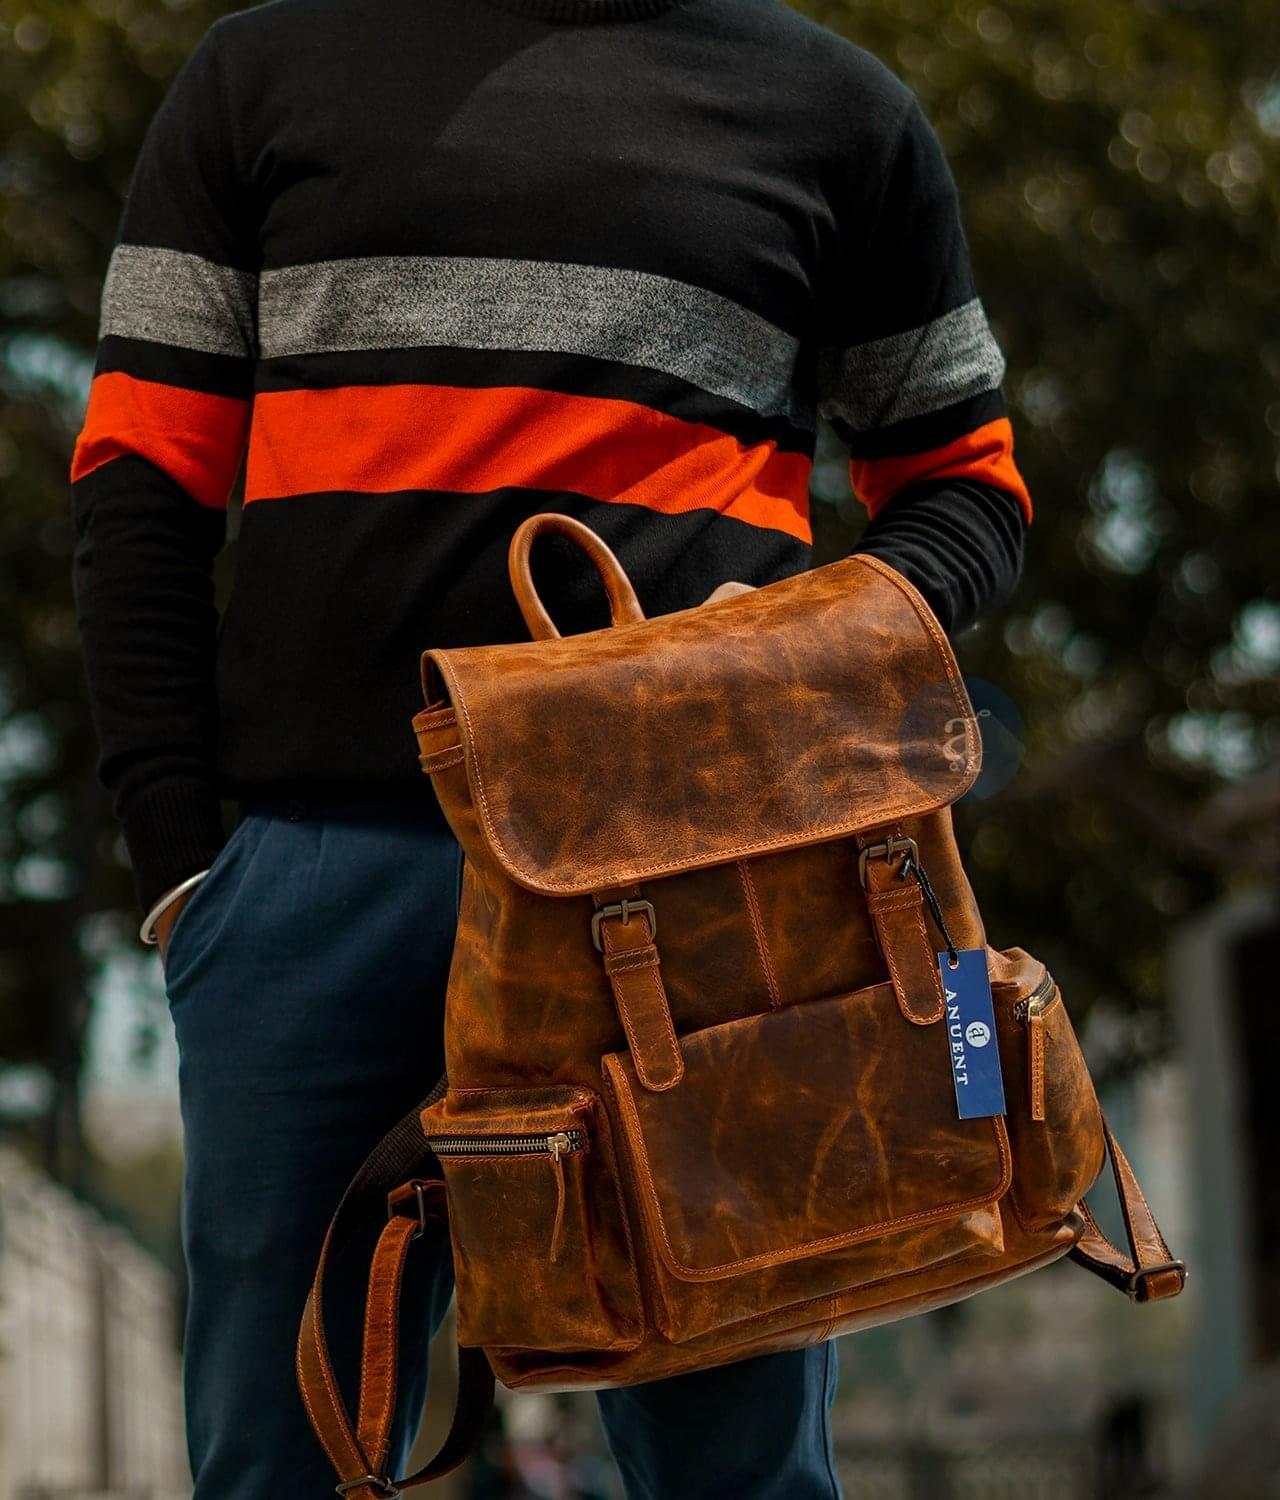 Buy Buffalo Leather Backpack Multi Pockets Daypack Travel Laptop Bag for Men  Women at .in